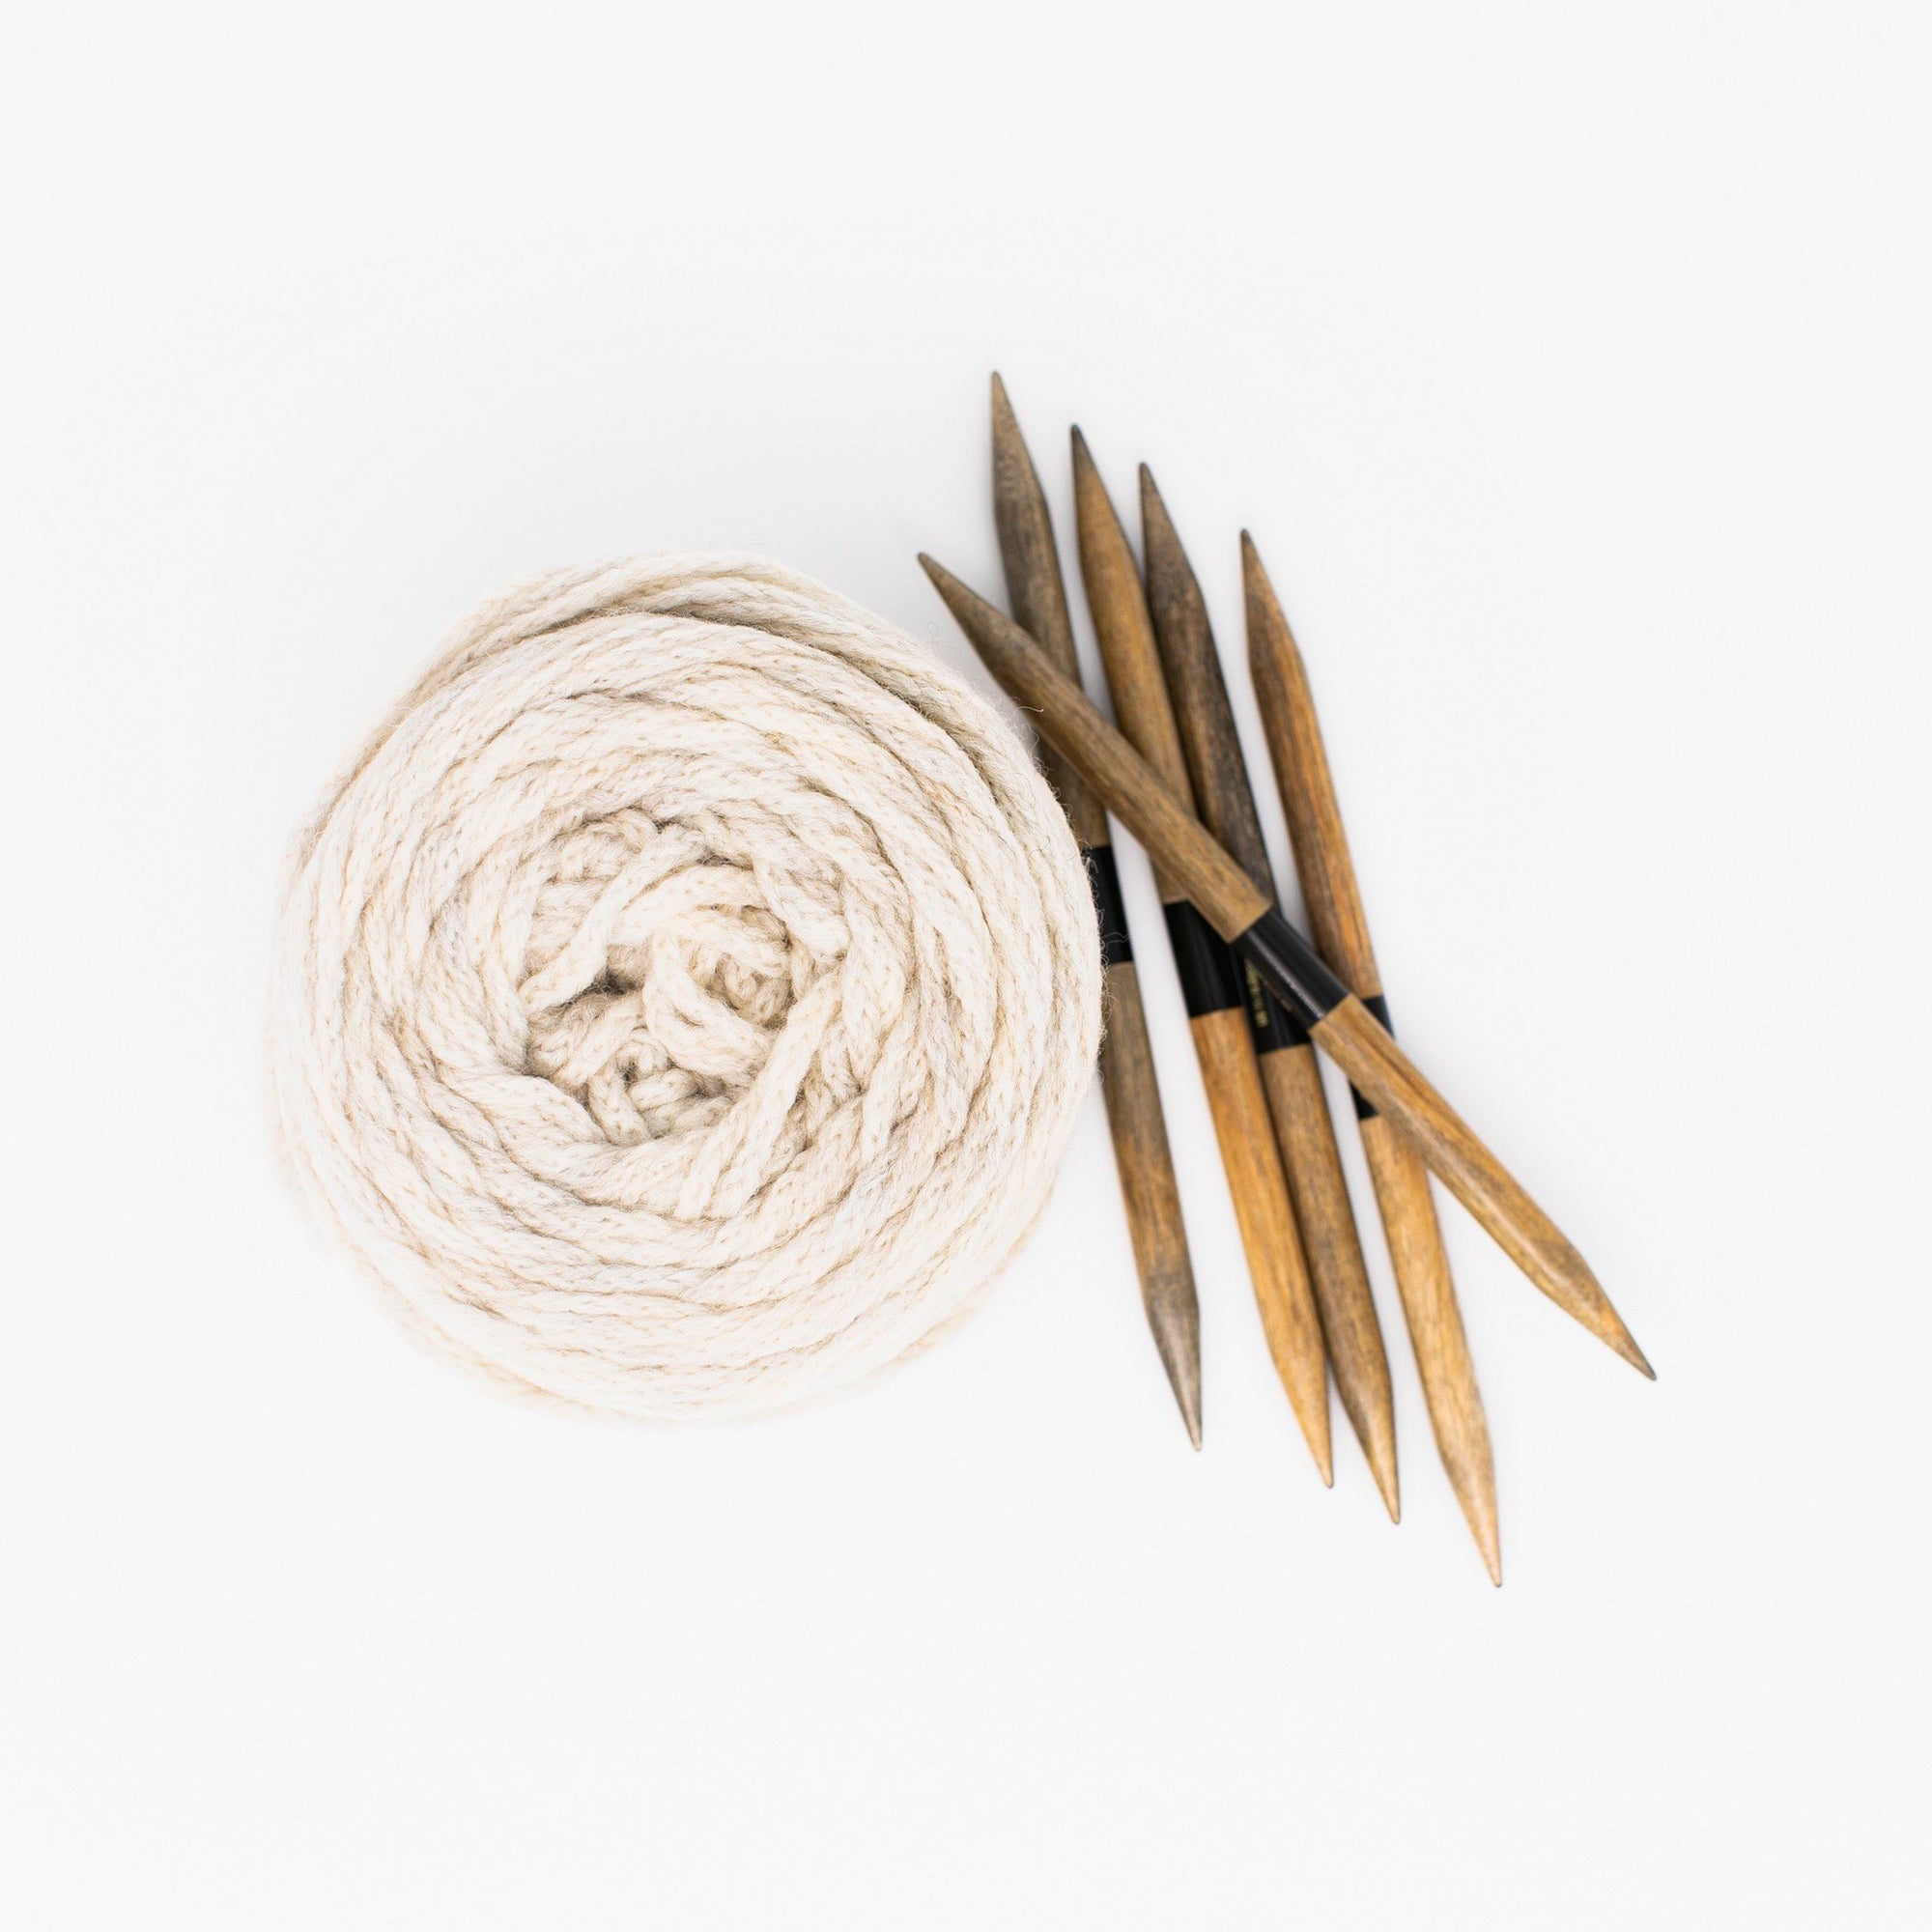  Lykke Driftwood Circular Knitting Needles 24 inch - Size 7